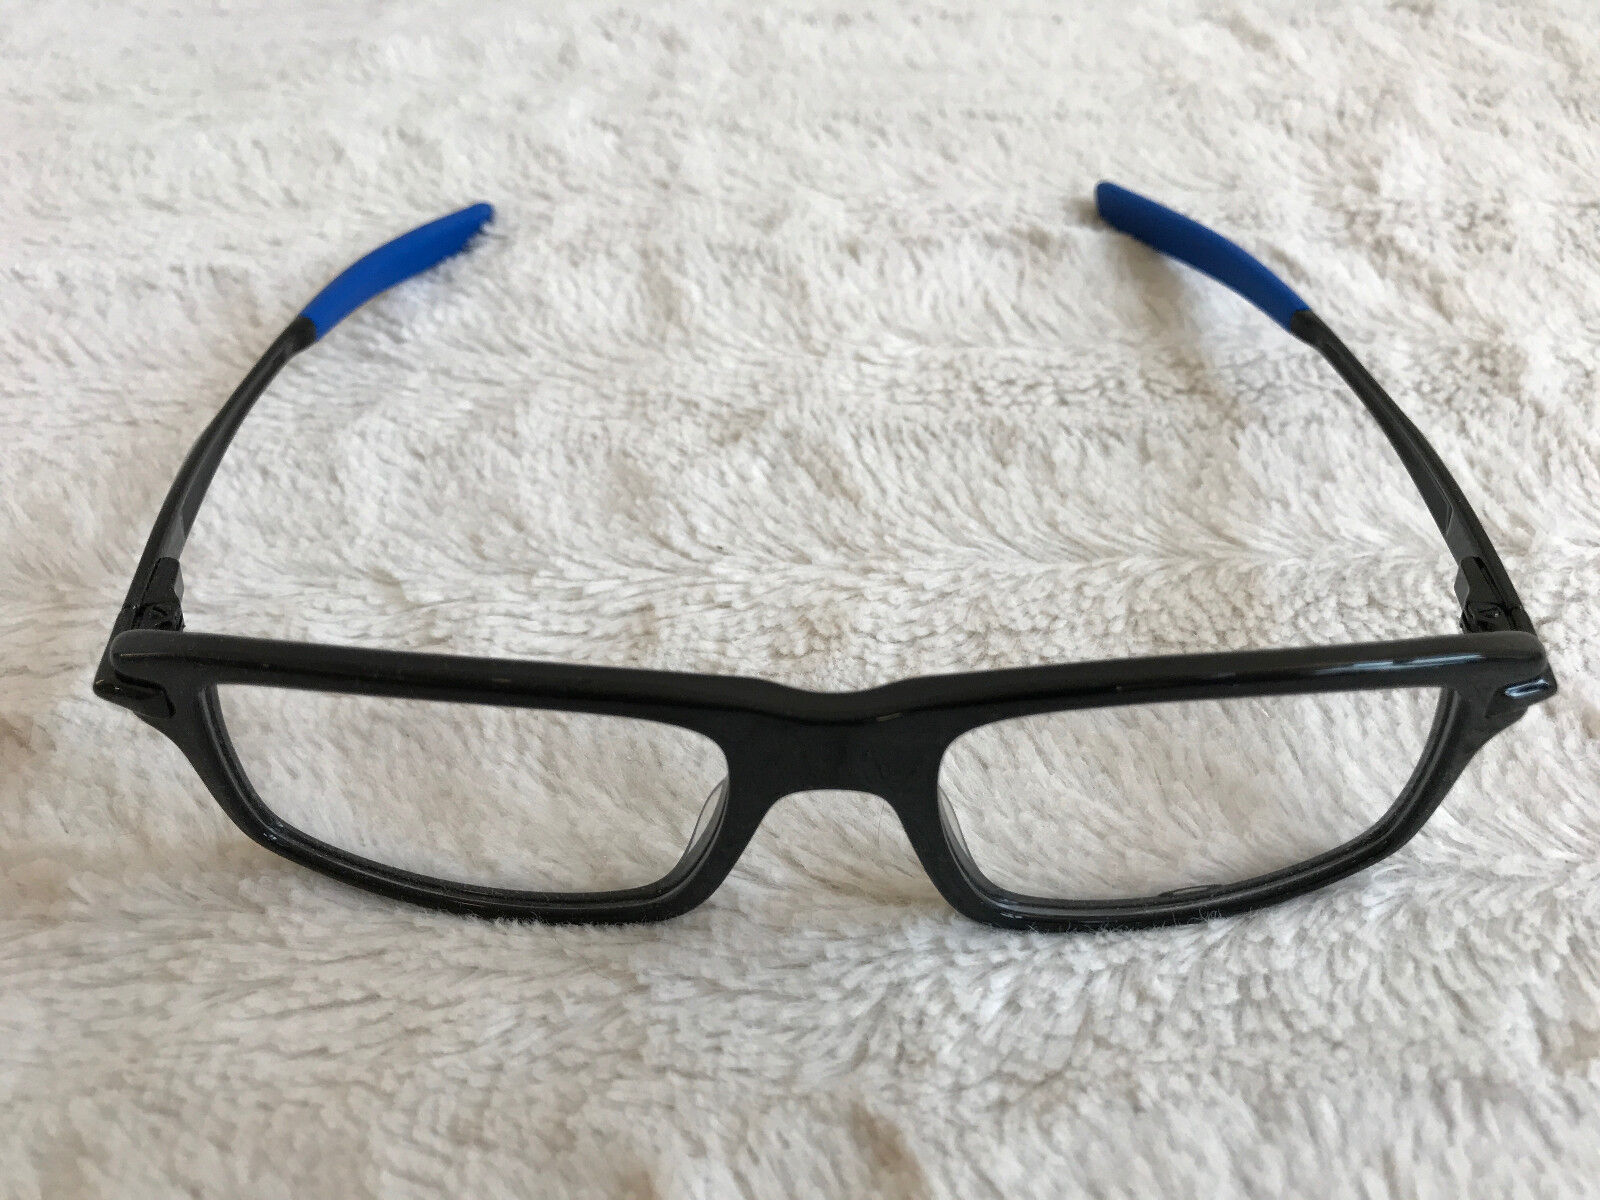 Oakley RX Eyeglasses Glasses Frame Polished Black Royal Blue OX1100-0351 Super mile widziana nowa praca